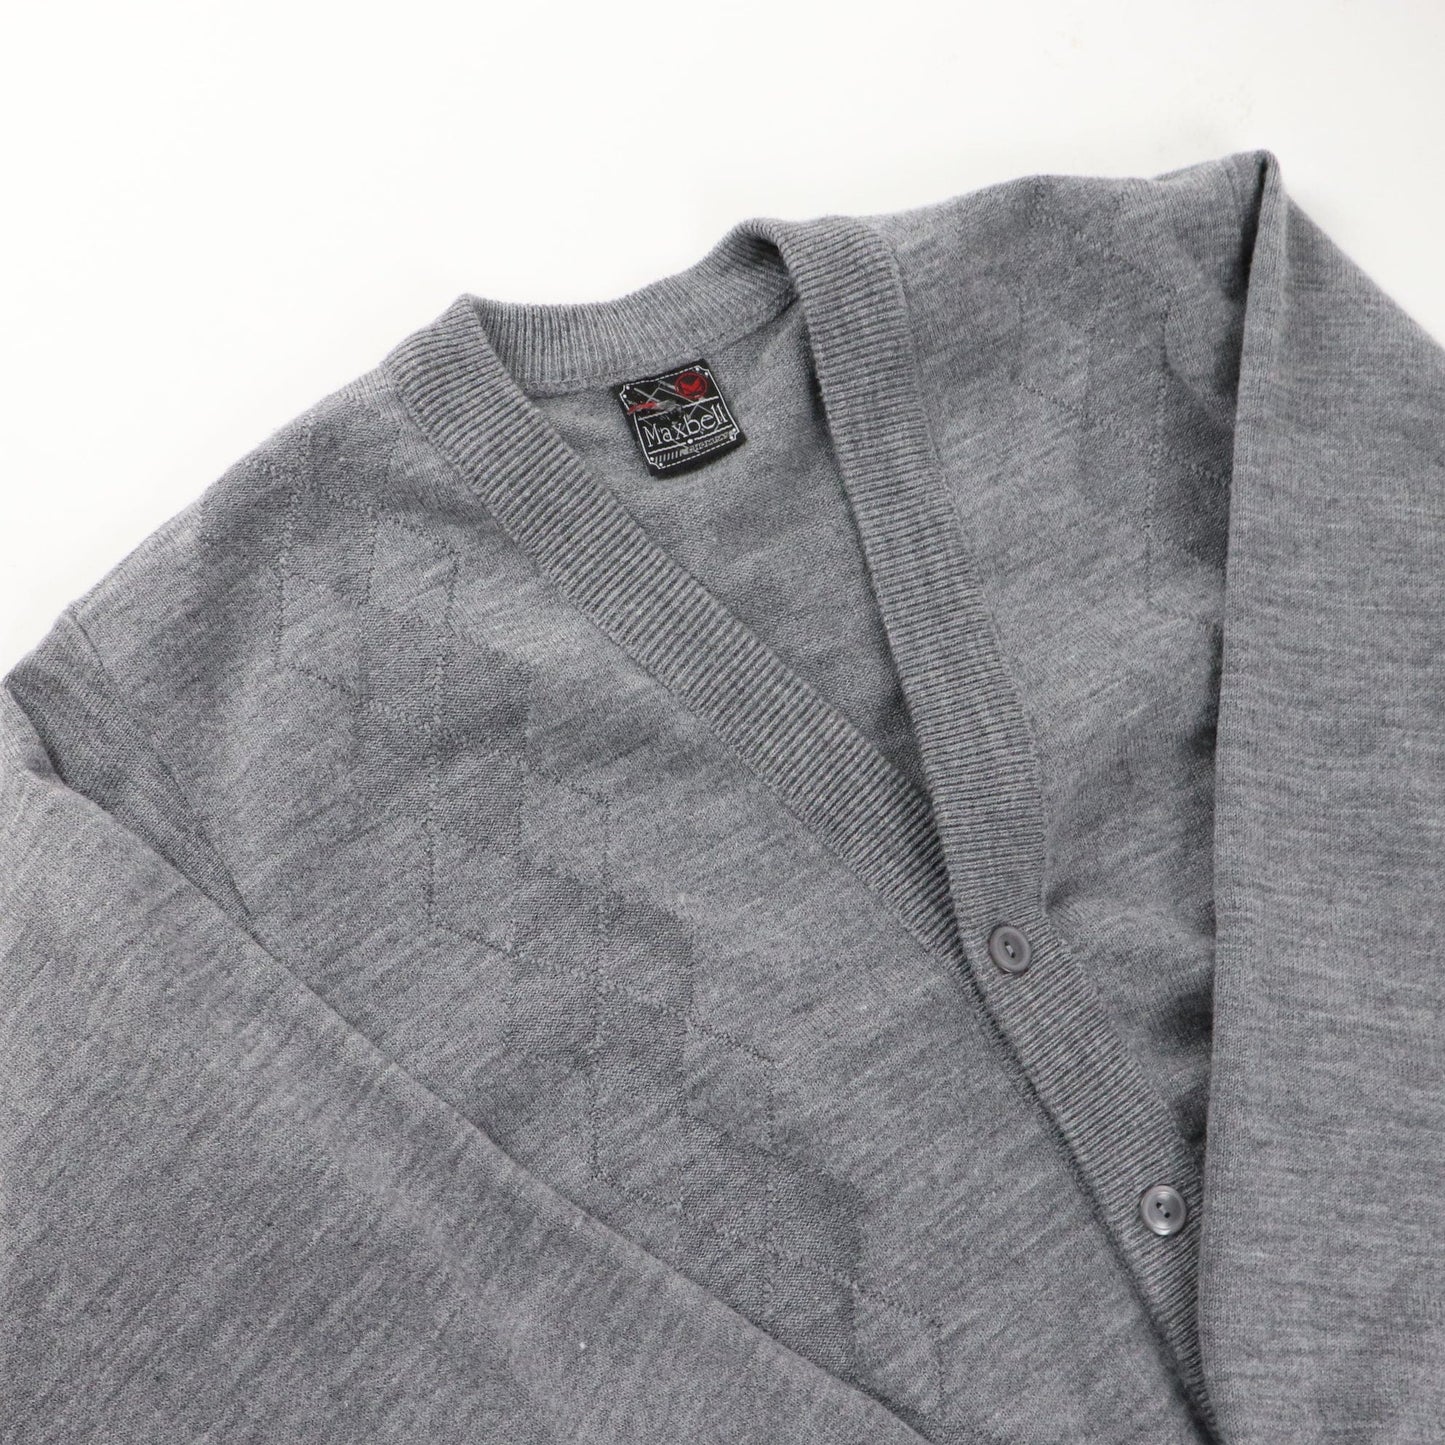 Other Sweatshirts & Hoodies Vintage Maxbell Knit Cardigan Sweater Size Medium